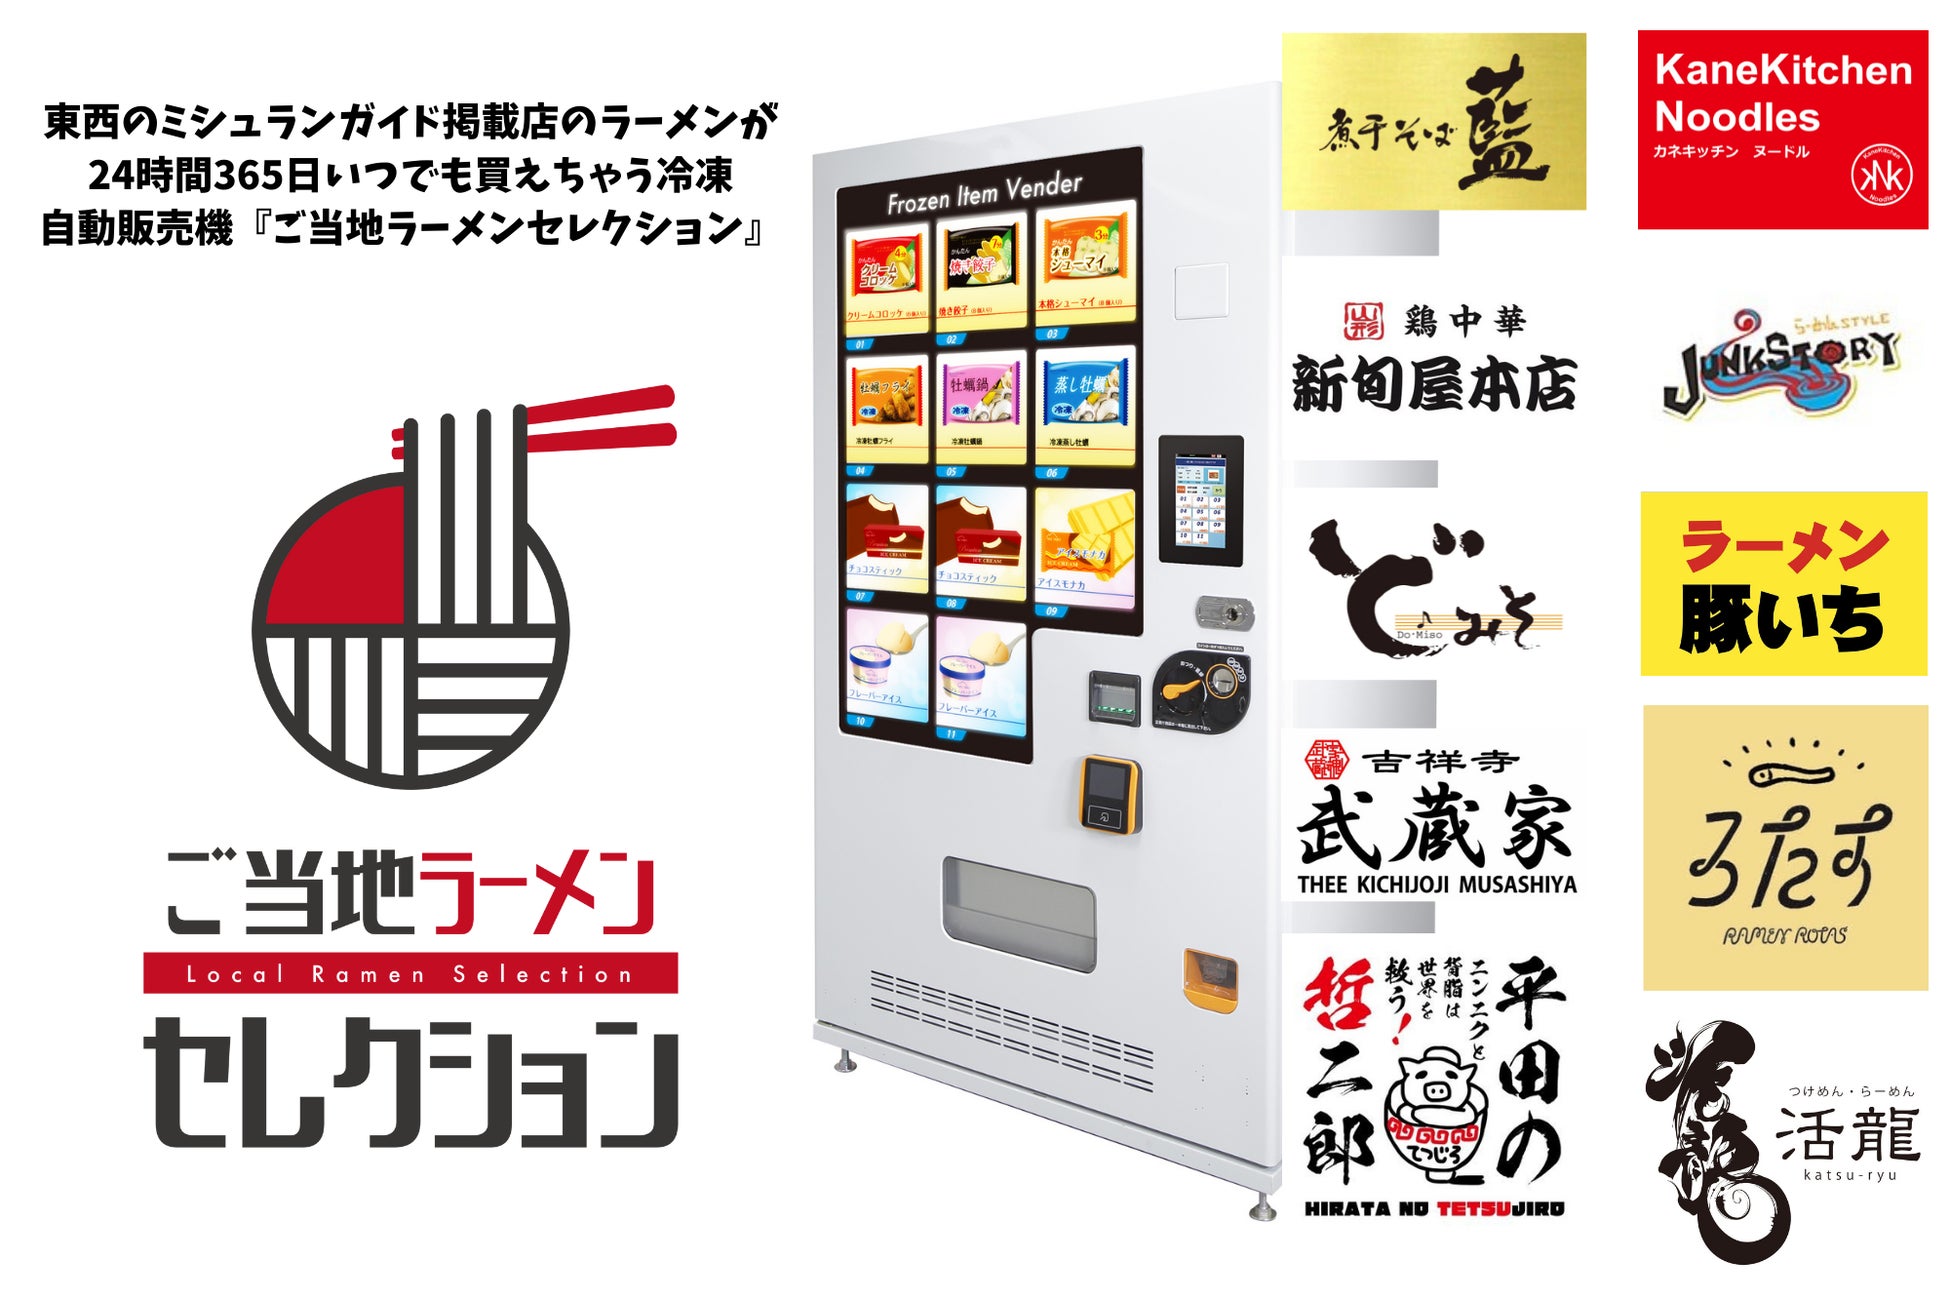 TESIO × orion コラボ、沖縄マリアージュセット発売